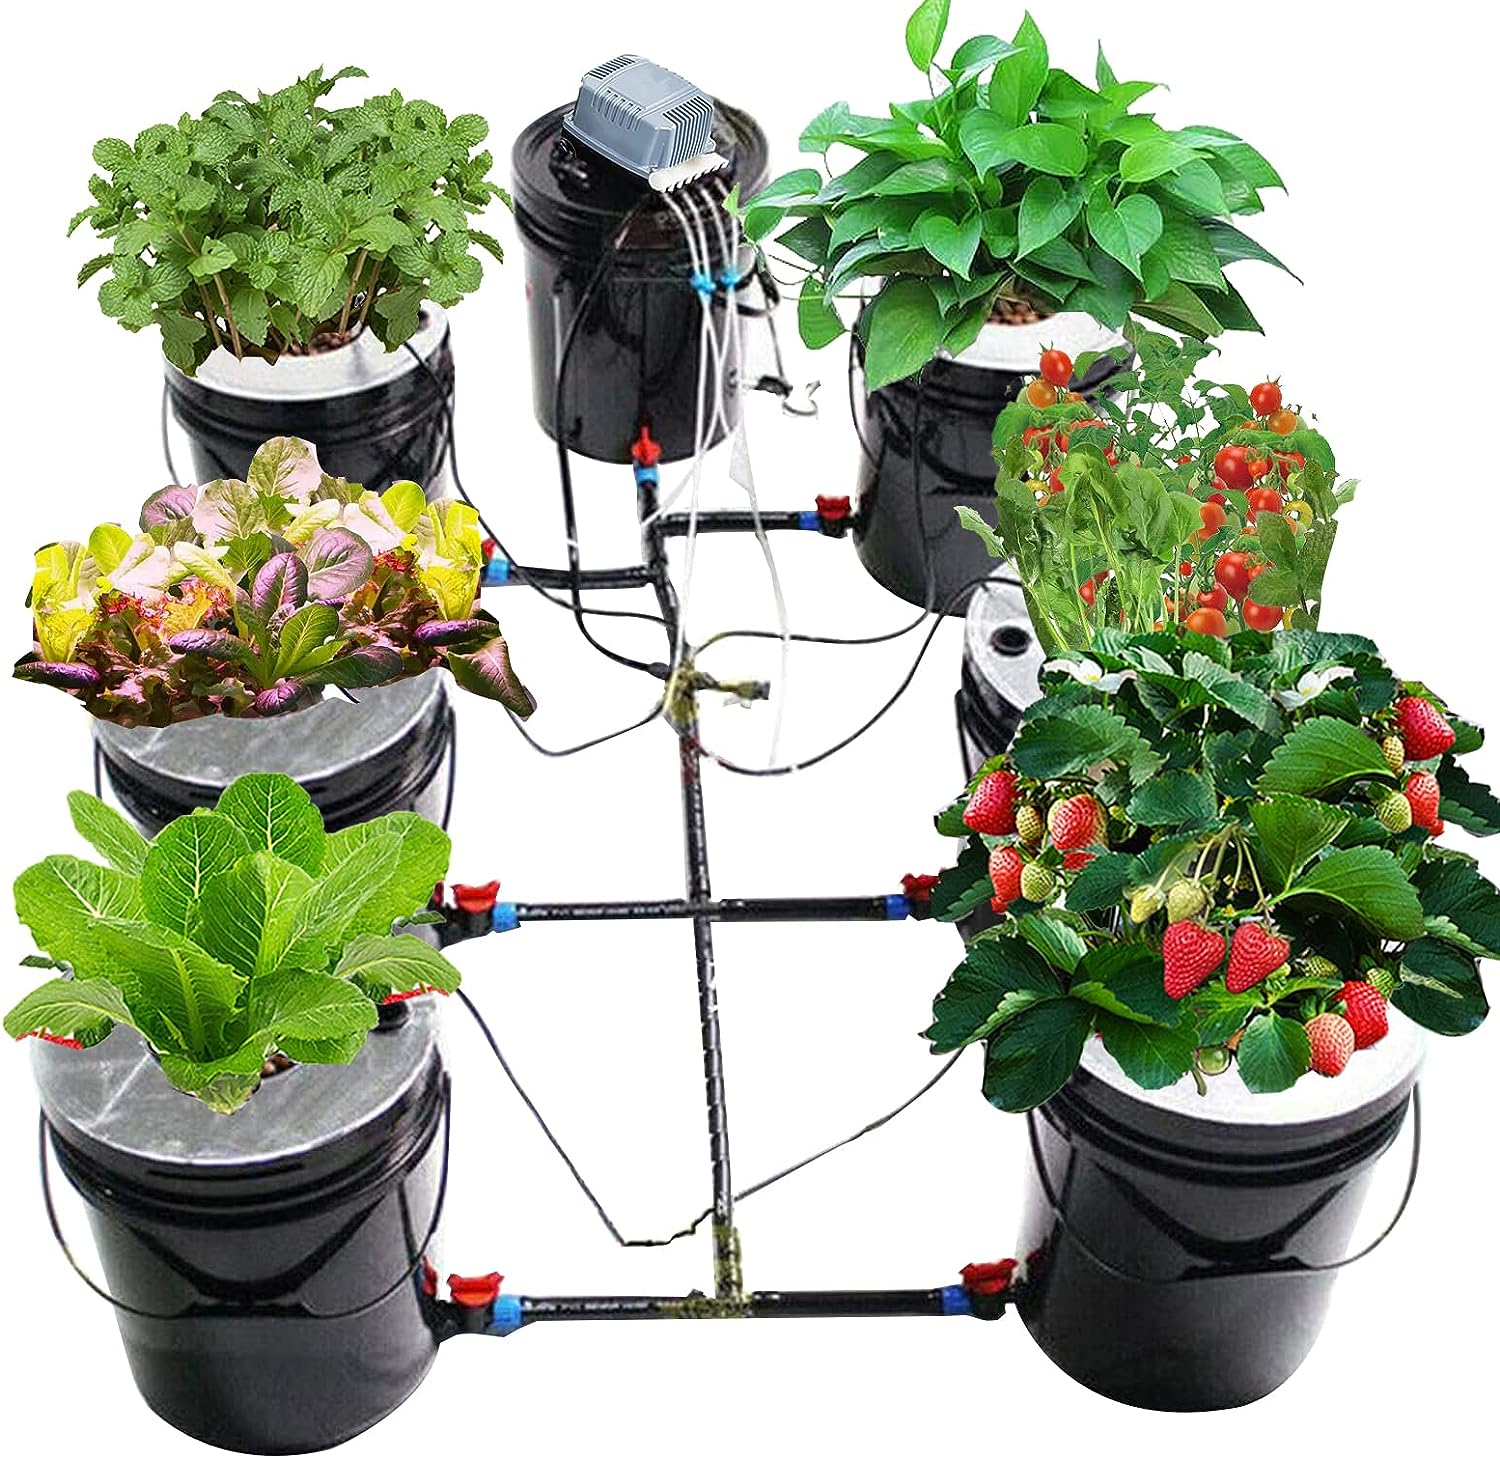 Indoor garden flourishing with plants grown using a Deep Water Culture Bucket System